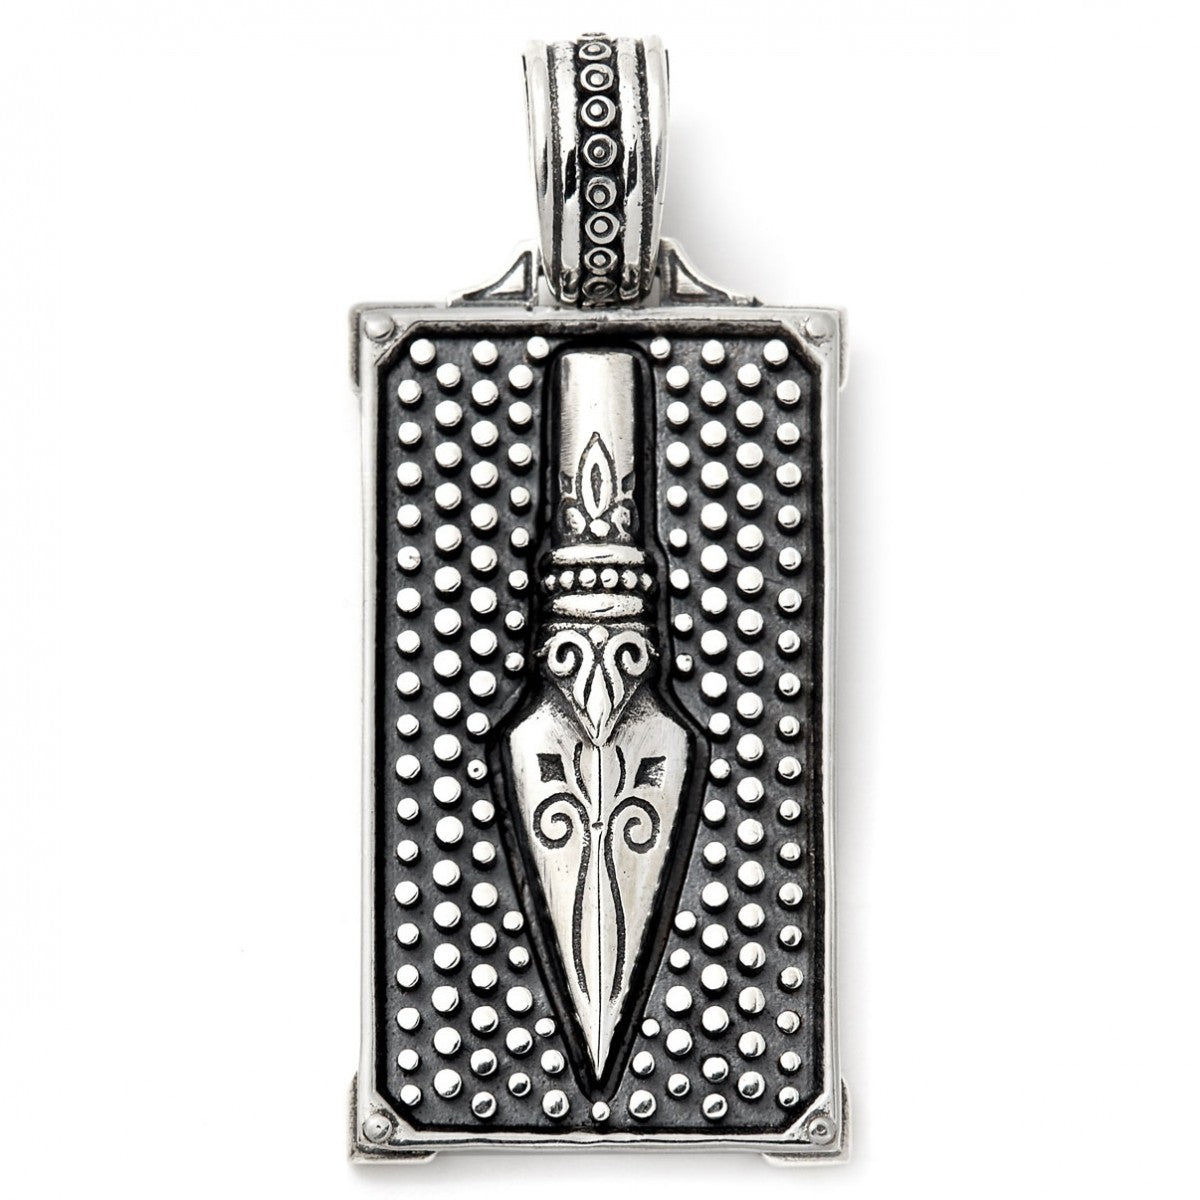 Konstantino Men's Sterling Silver Pendant With Arrow Design, 1 7/8 Inch